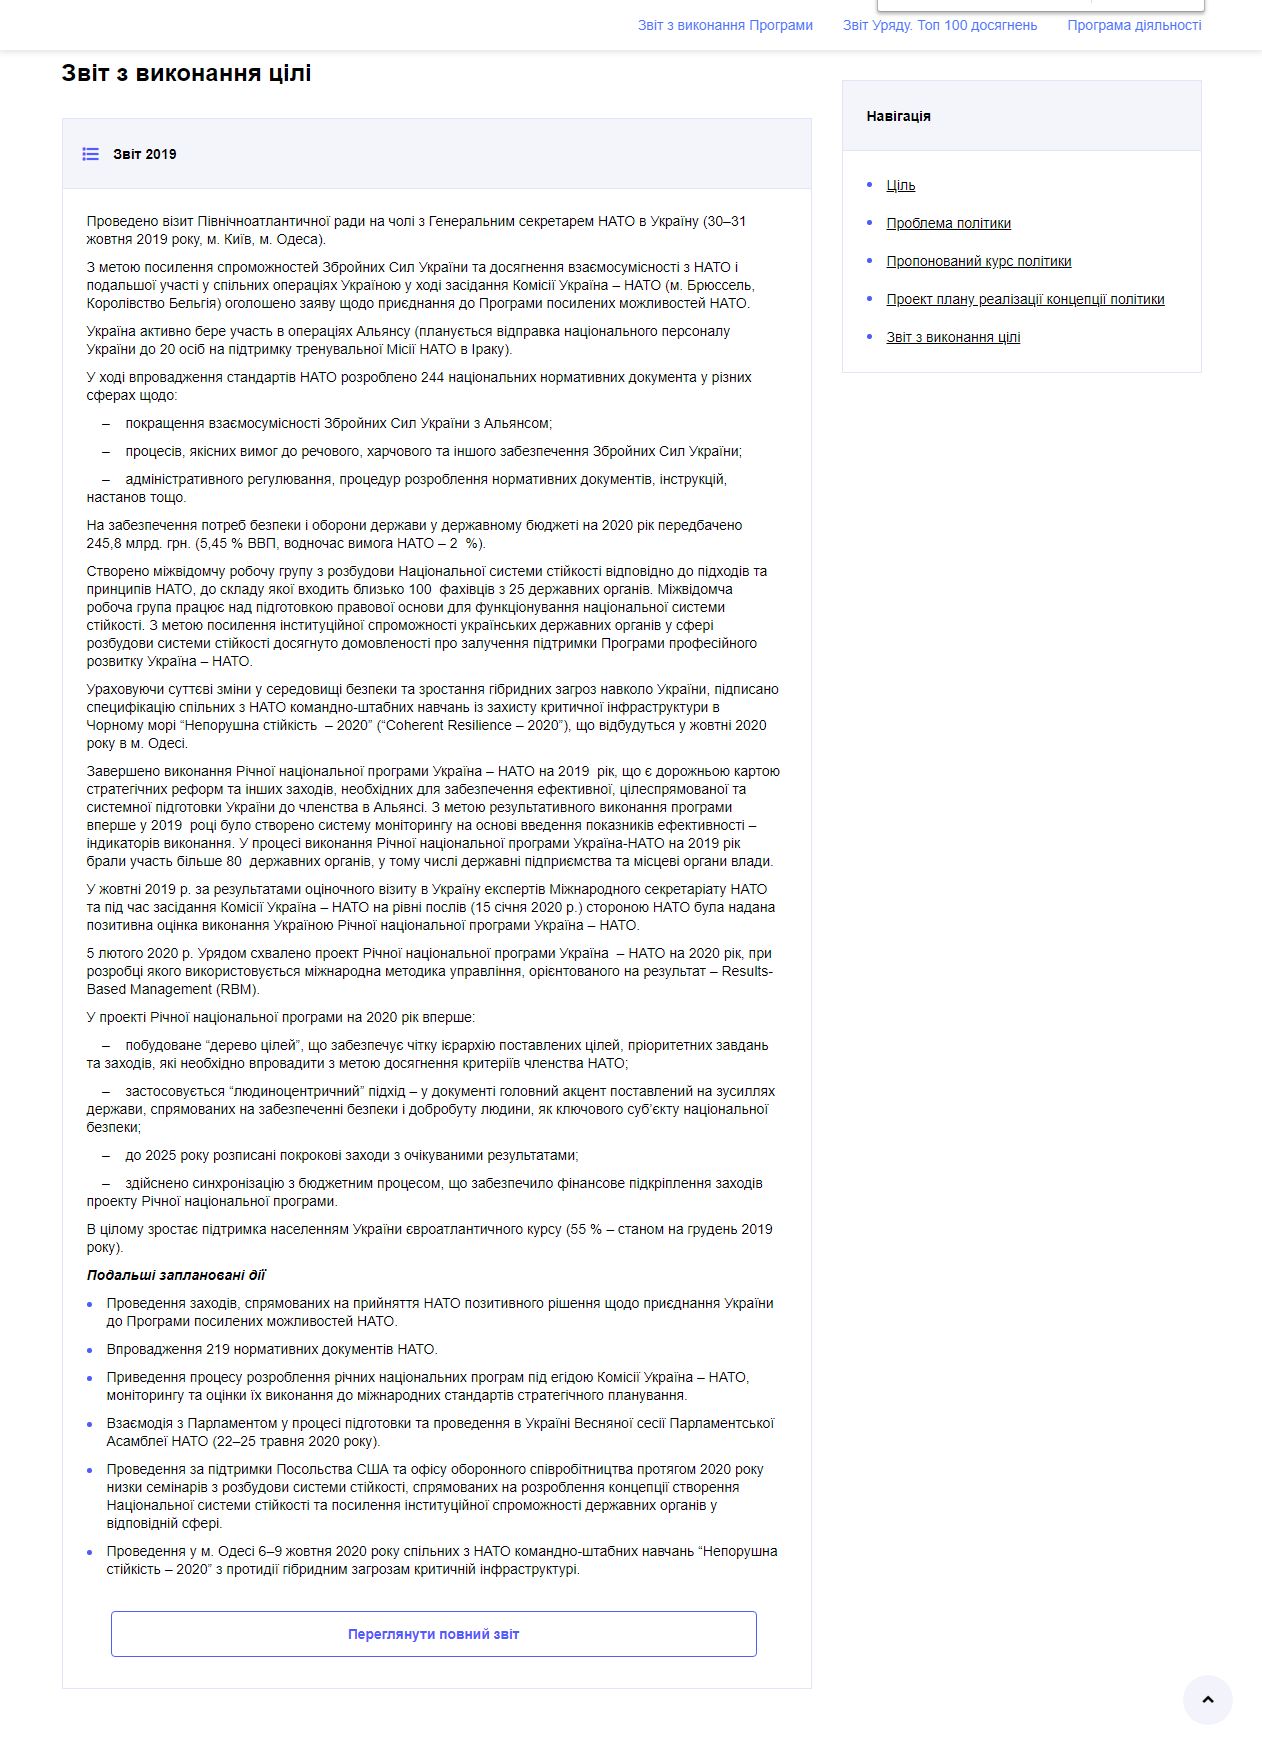 https://program.kmu.gov.ua/meta/ukraina-vidpovidae-principam-ta-kriteriam-neobhidnim-dla-nabutta-clenstva-v-organizacii-pivnicnoatlanticnogo-dogovoru